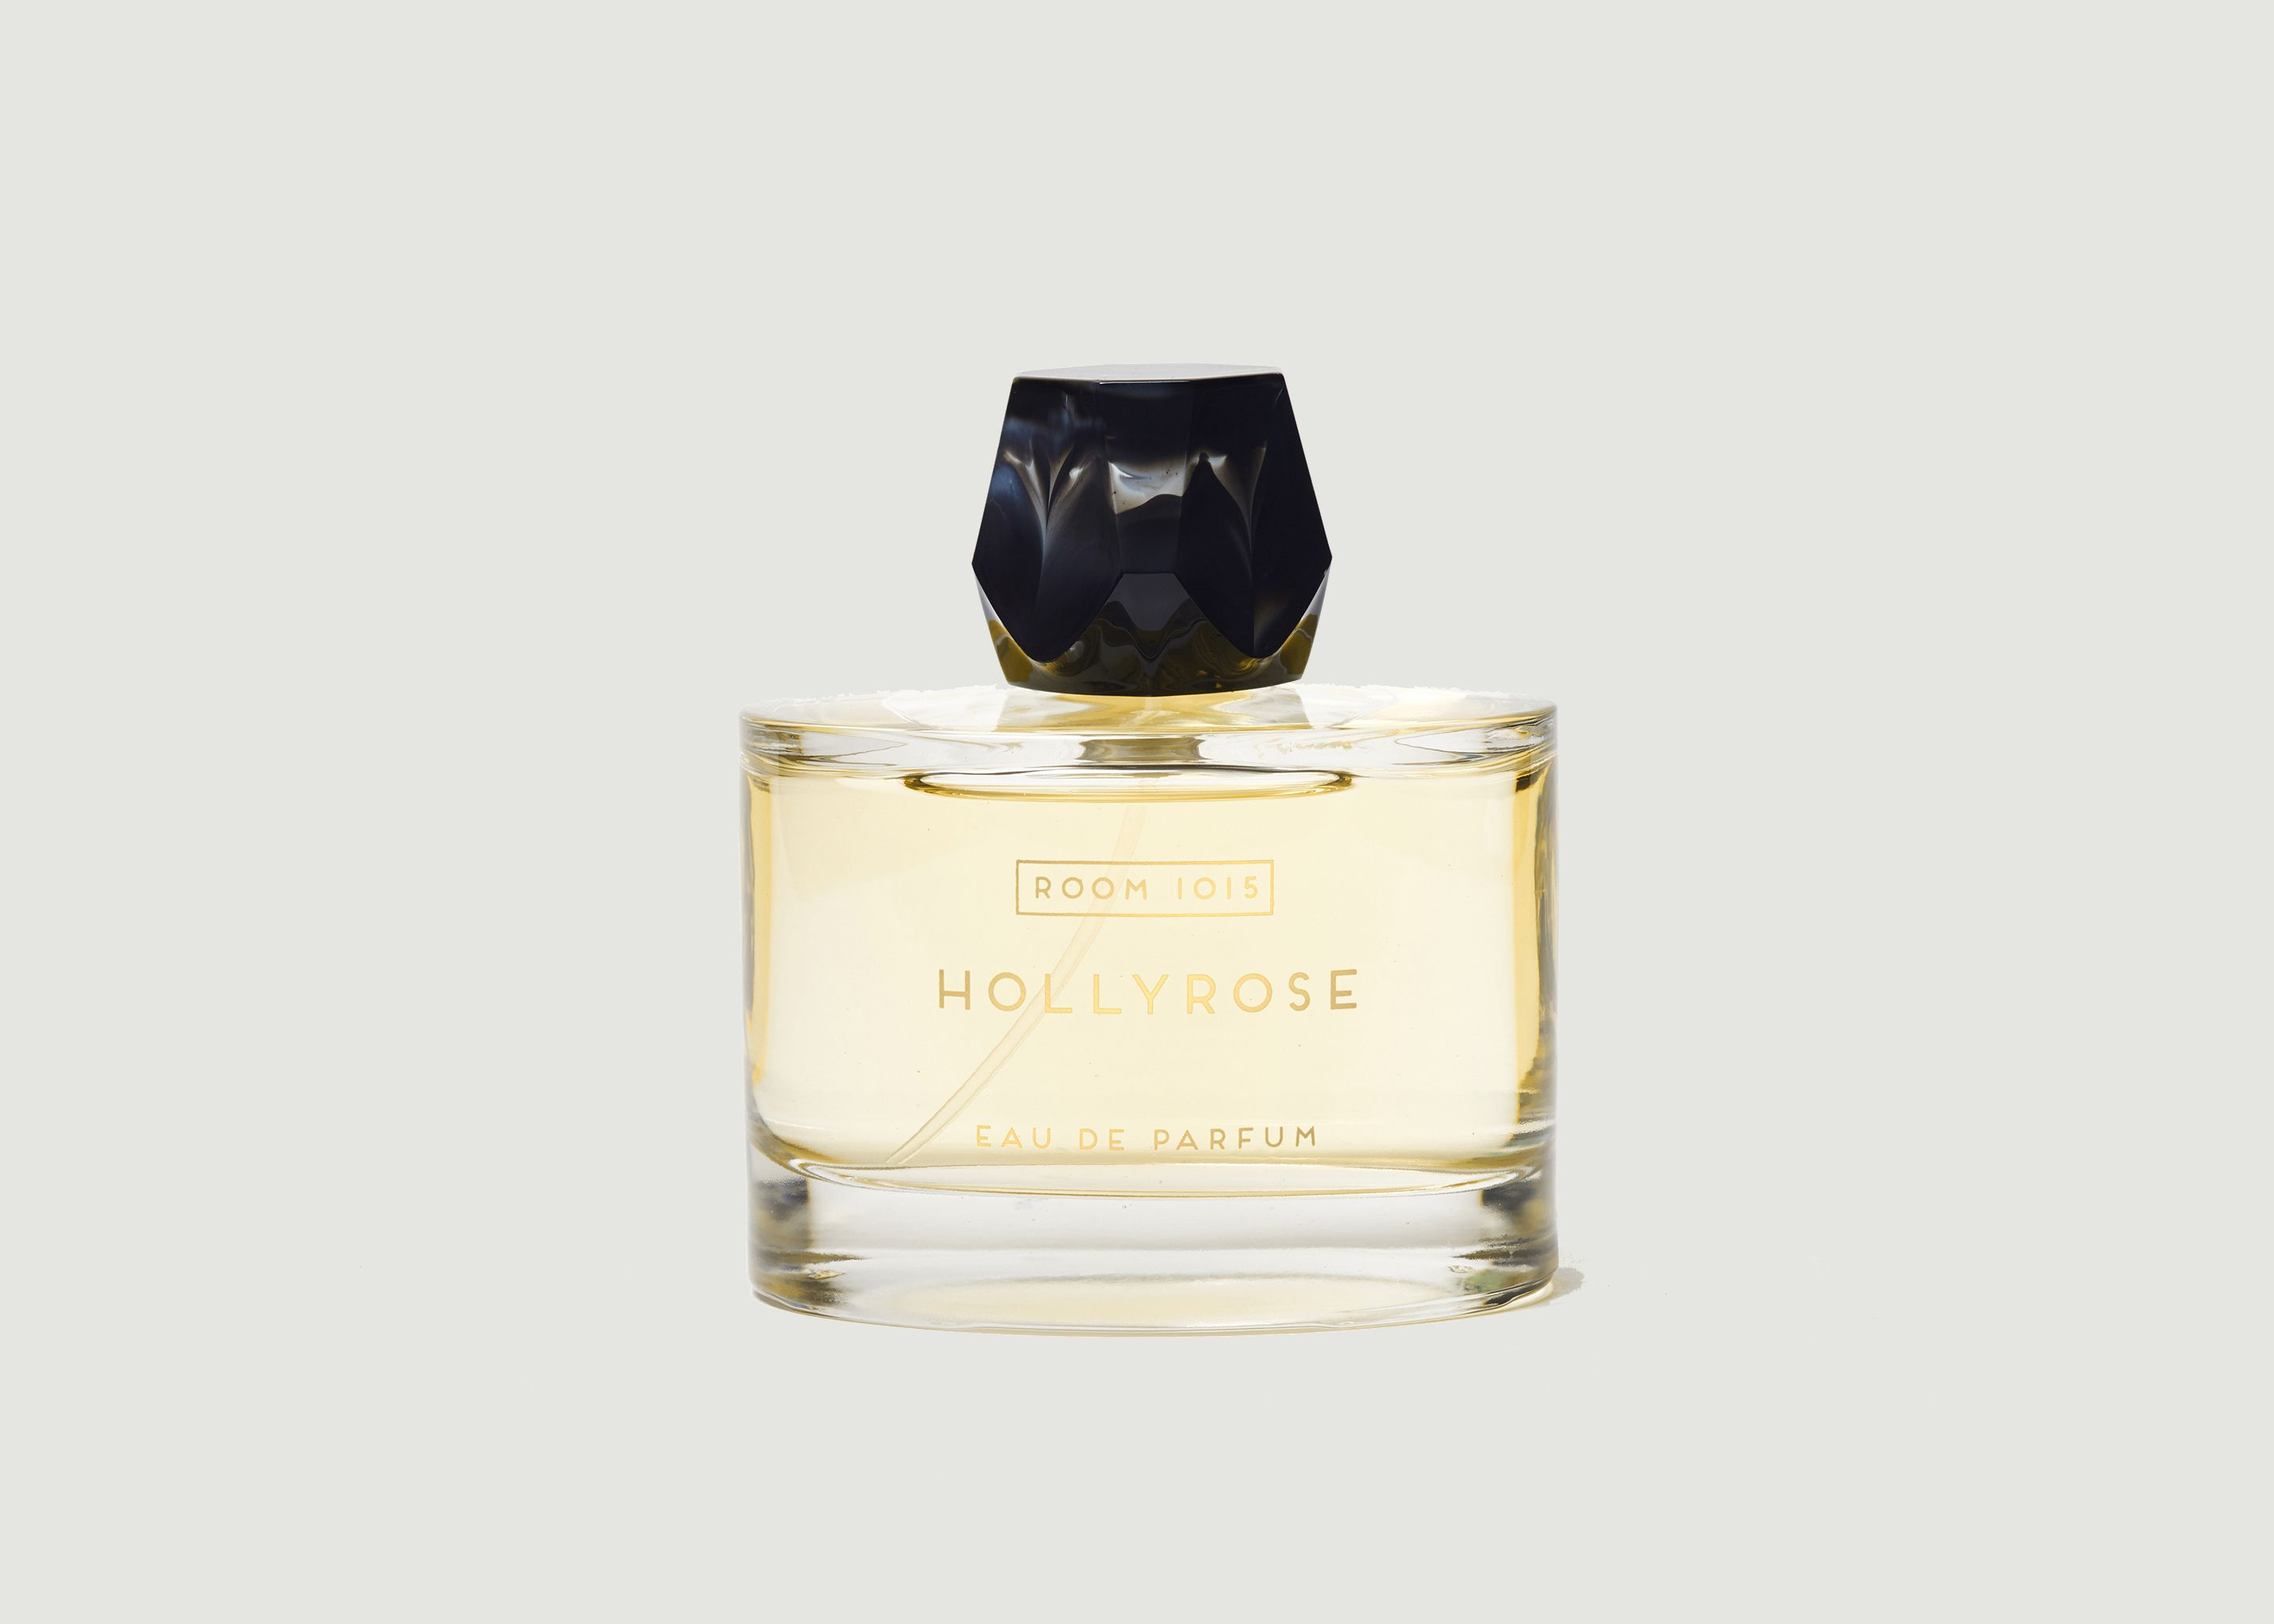 Parfum Hollyrose DOUBLON AVEC 61836 - Room 1015